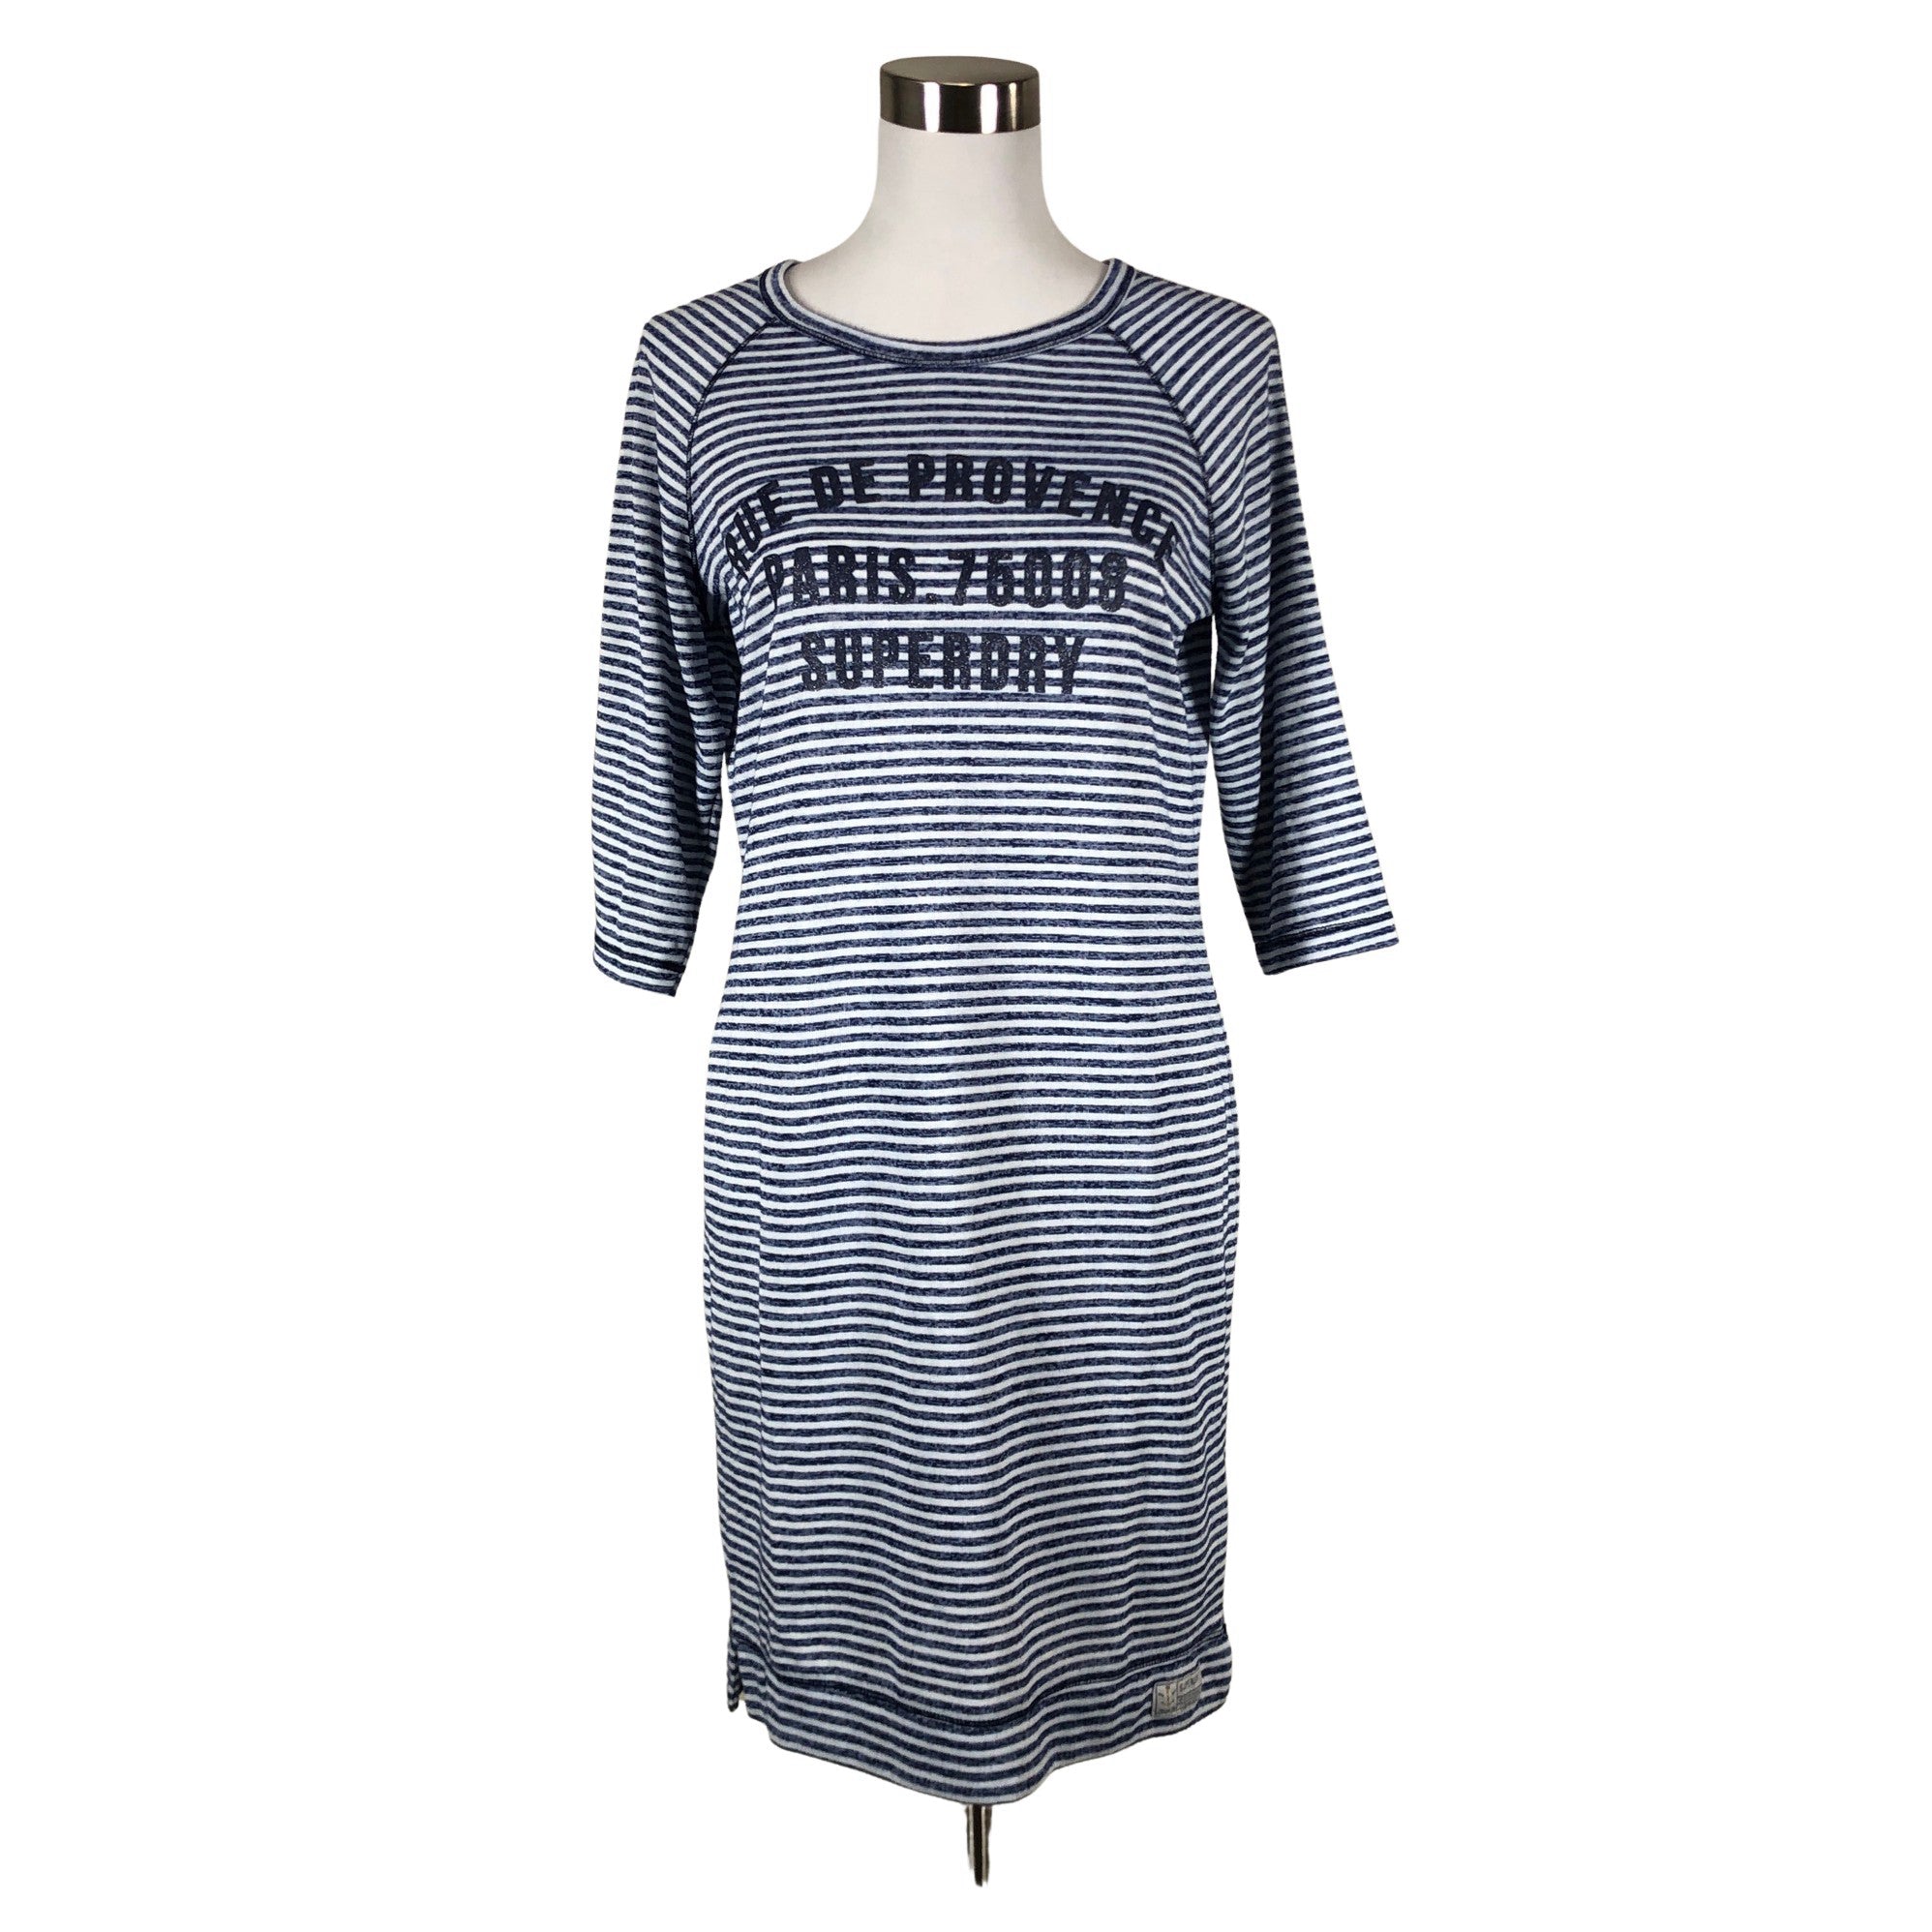 schuld Meesterschap vragenlijst Women's Superdry Tricot dress, size 40 (Blue) | Emmy